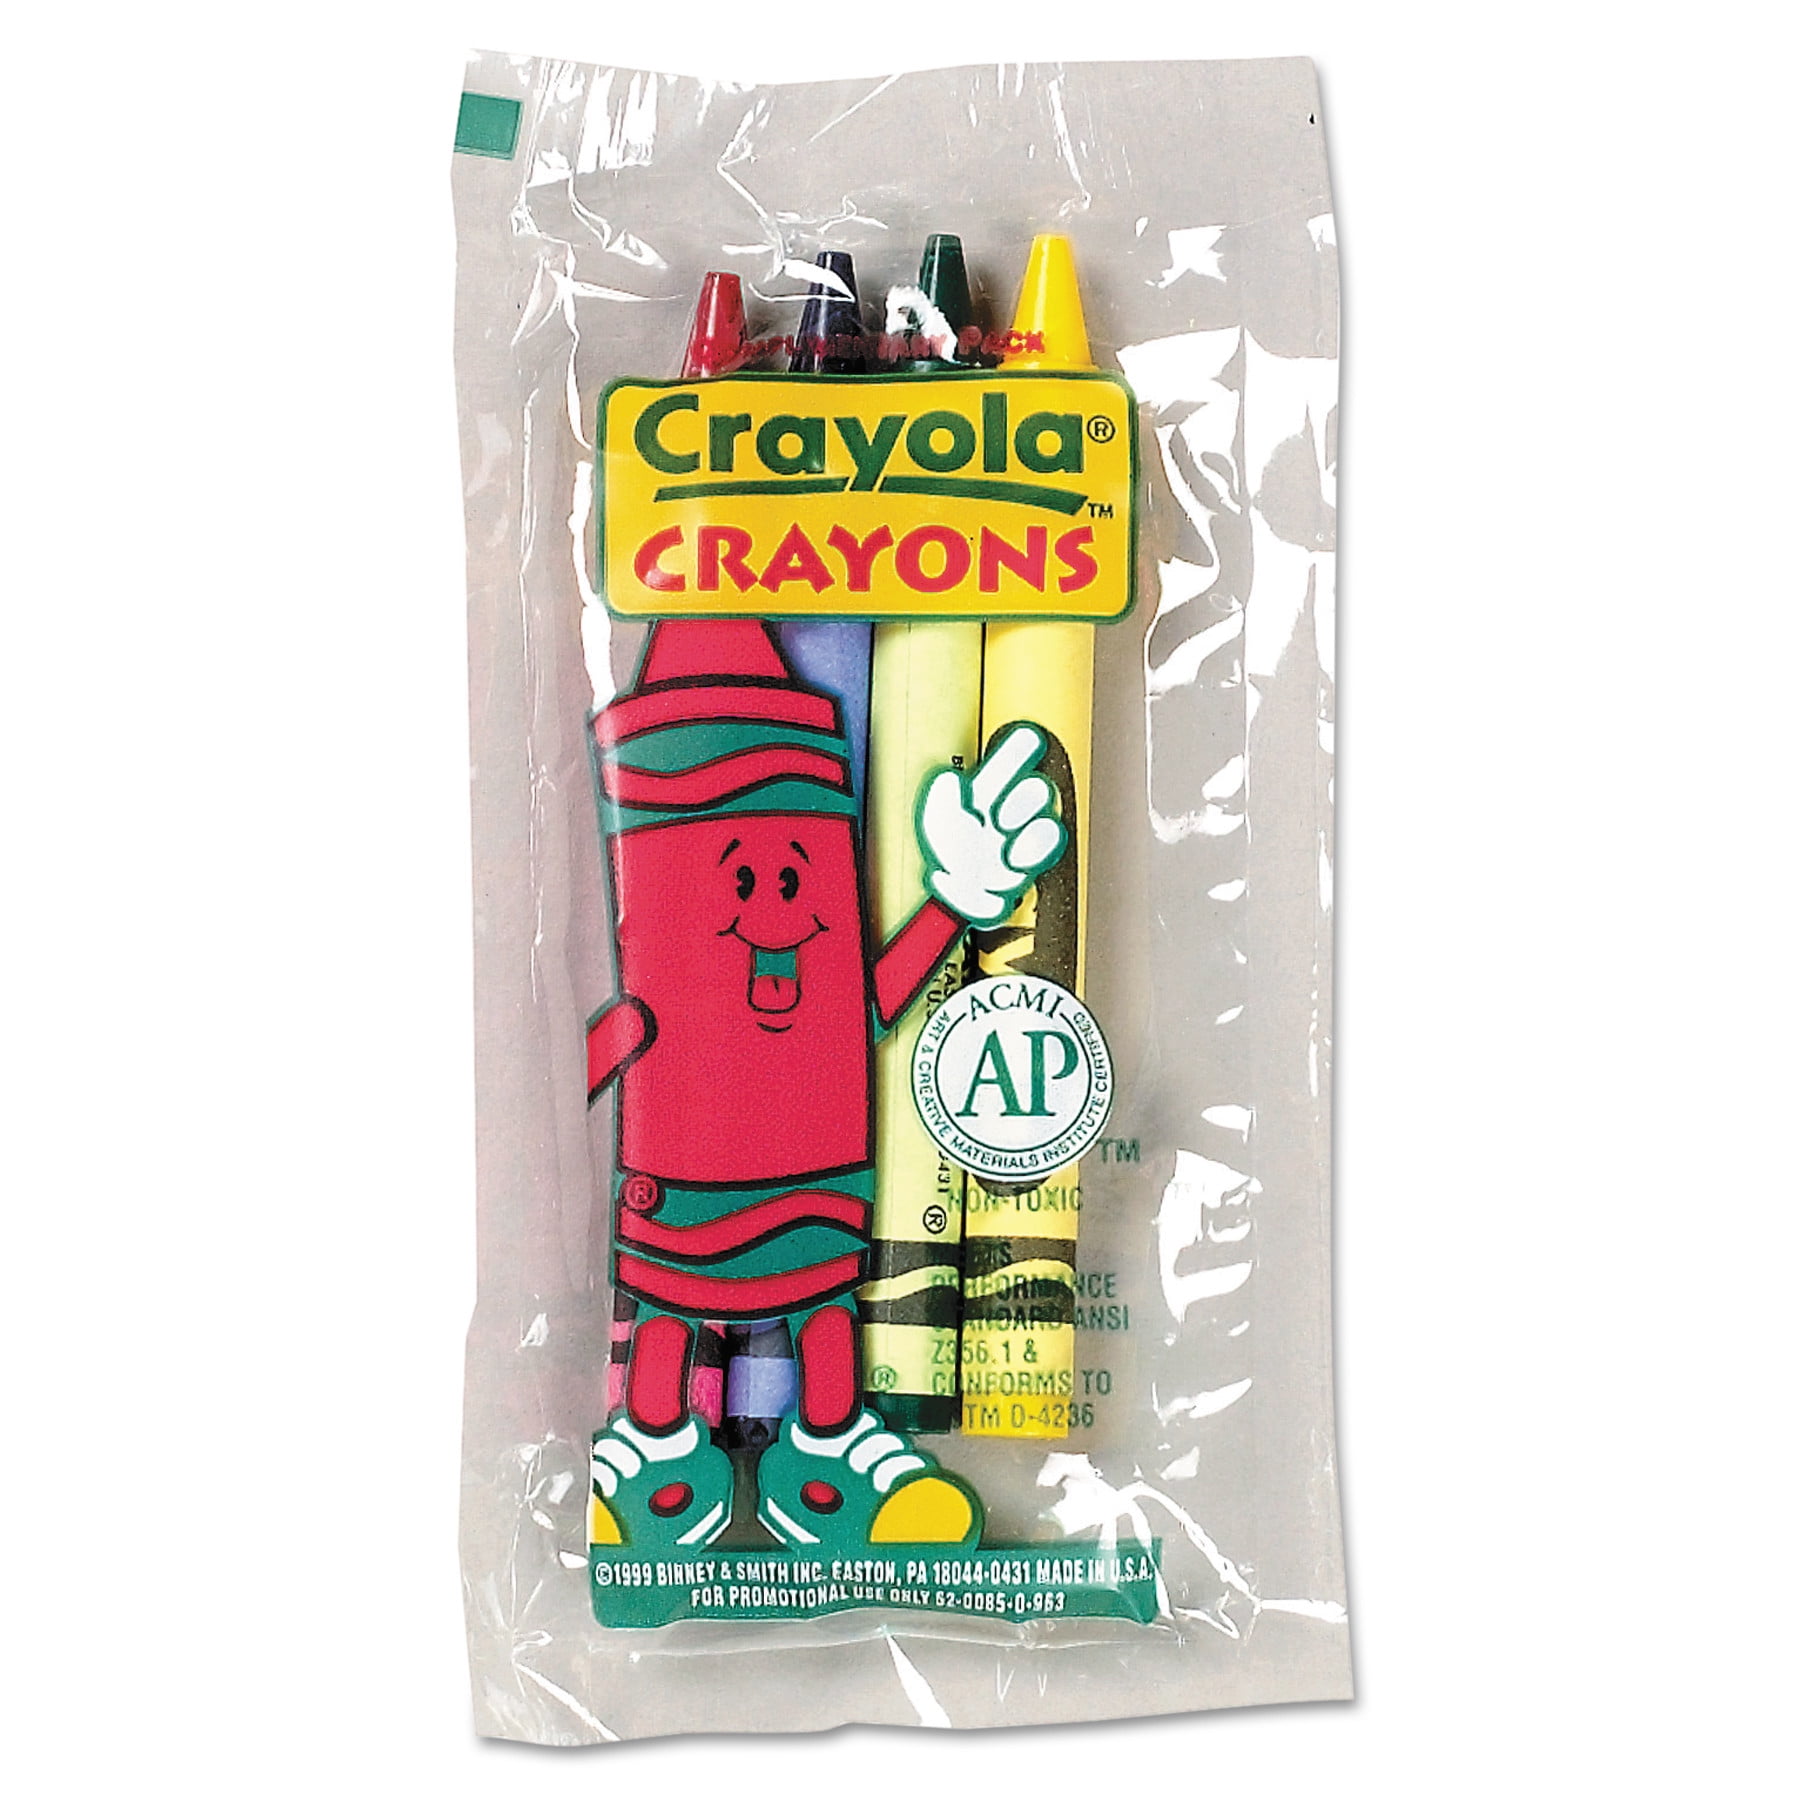 Cibowares 4 Color Bulk Crayons, Case of 3,000